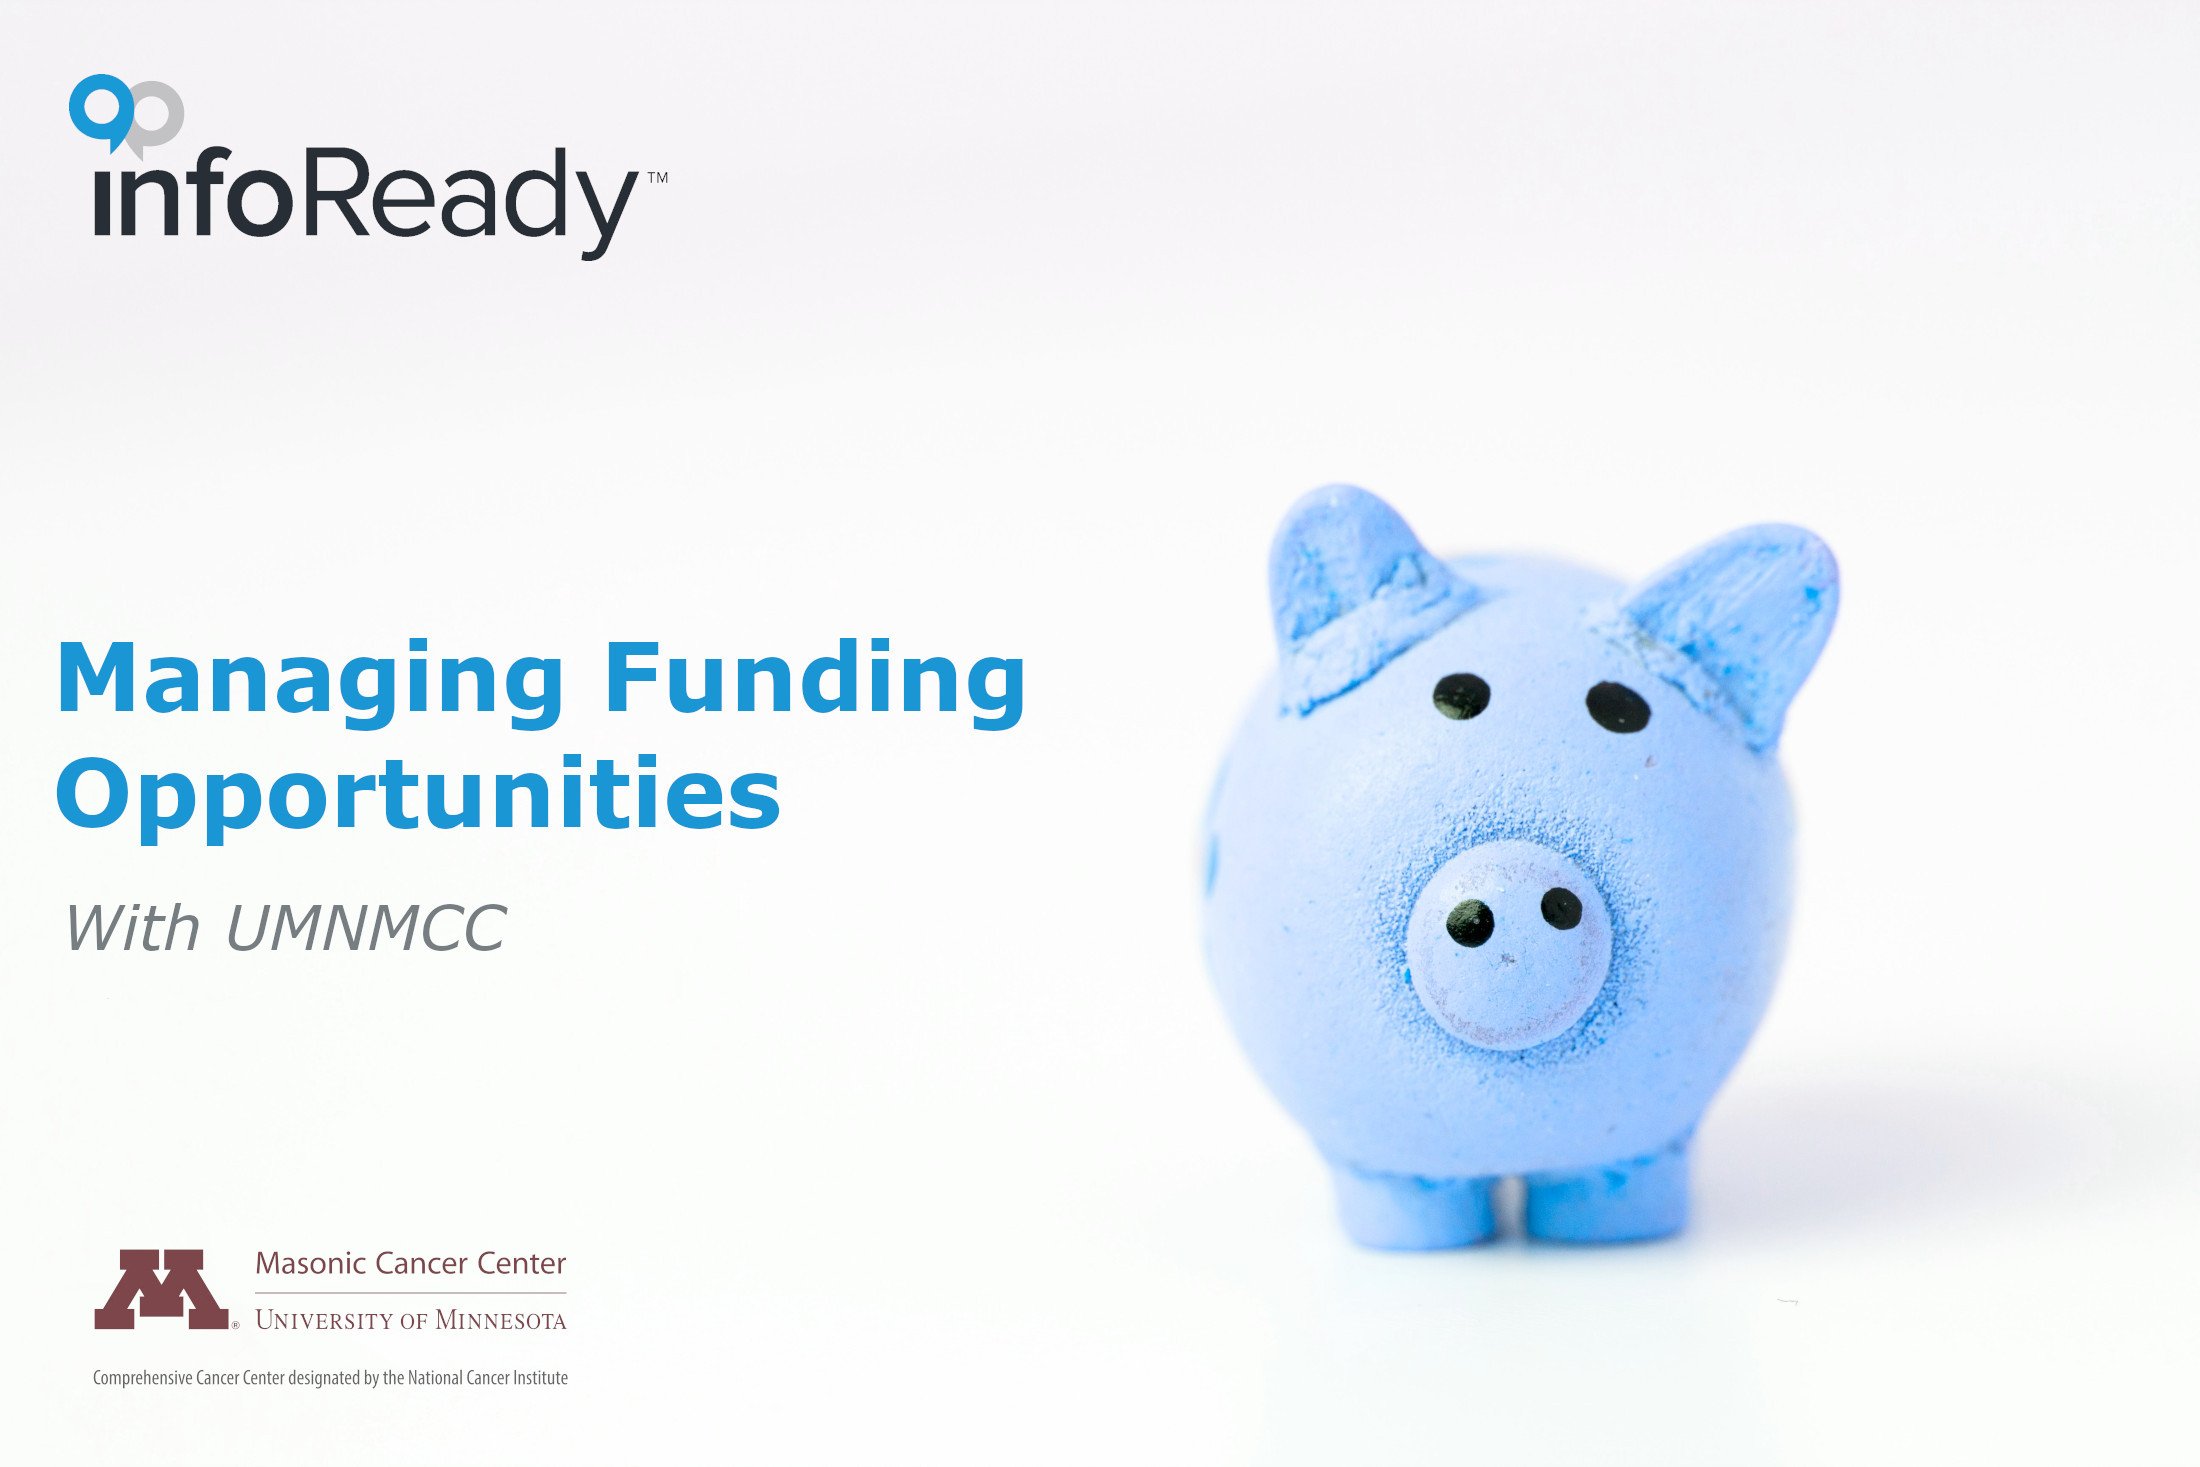 Piggy bank for funding opportunities